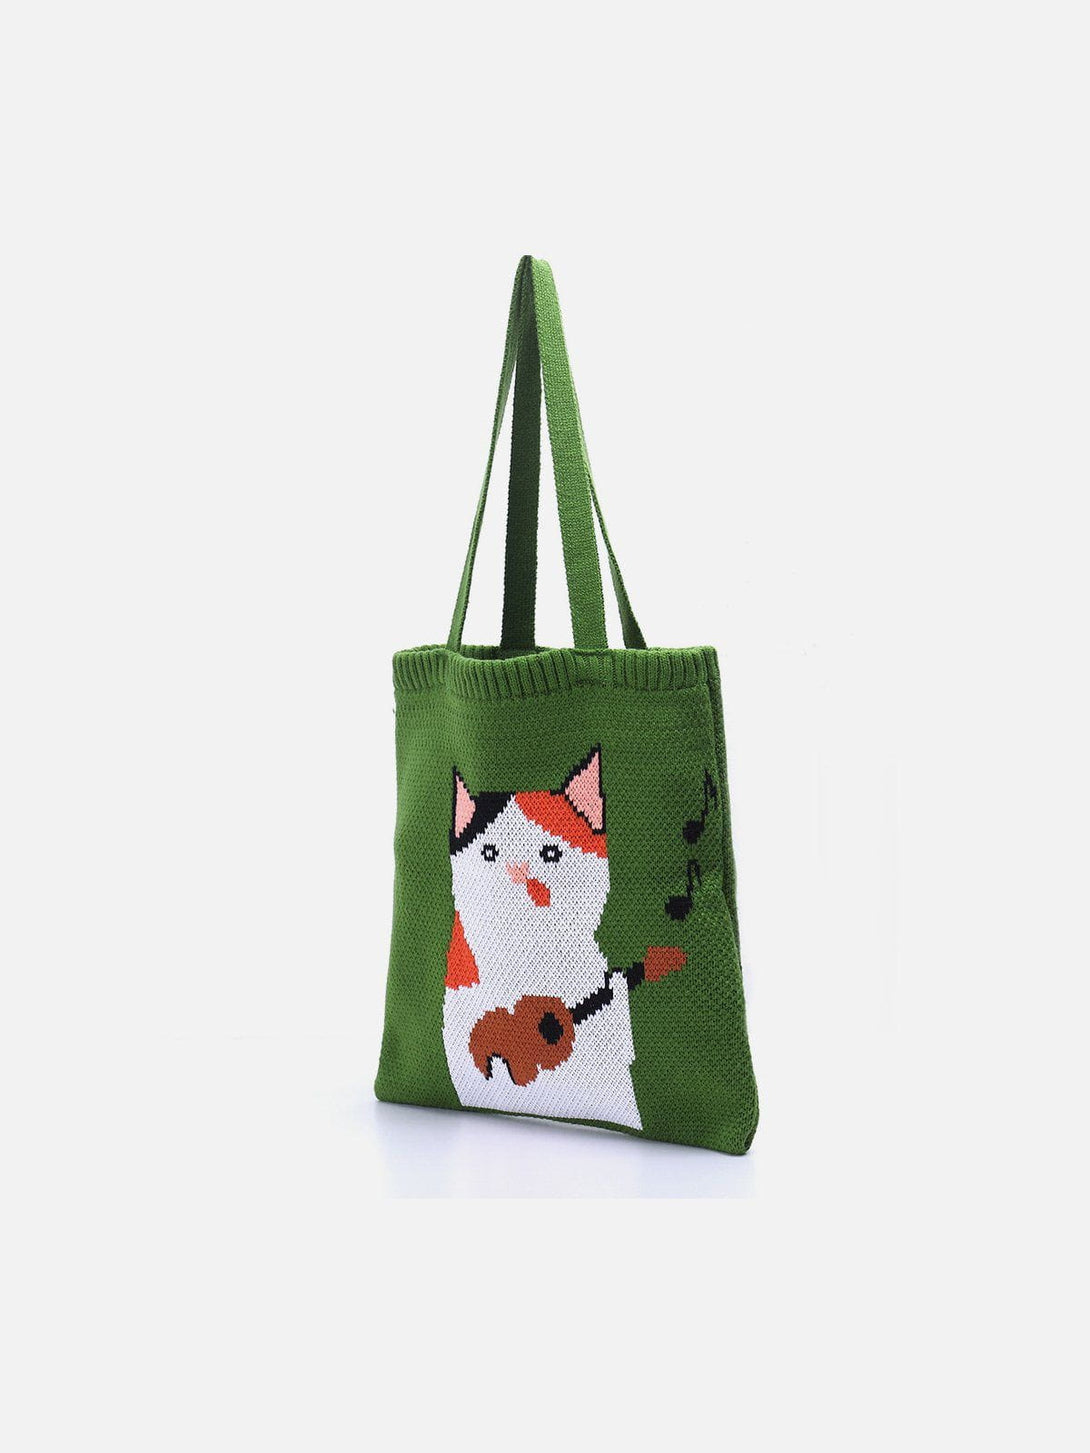 Majesda® - "Guitar Cat" Graphic Knitting Bag- Outfit Ideas - Streetwear Fashion - majesda.com